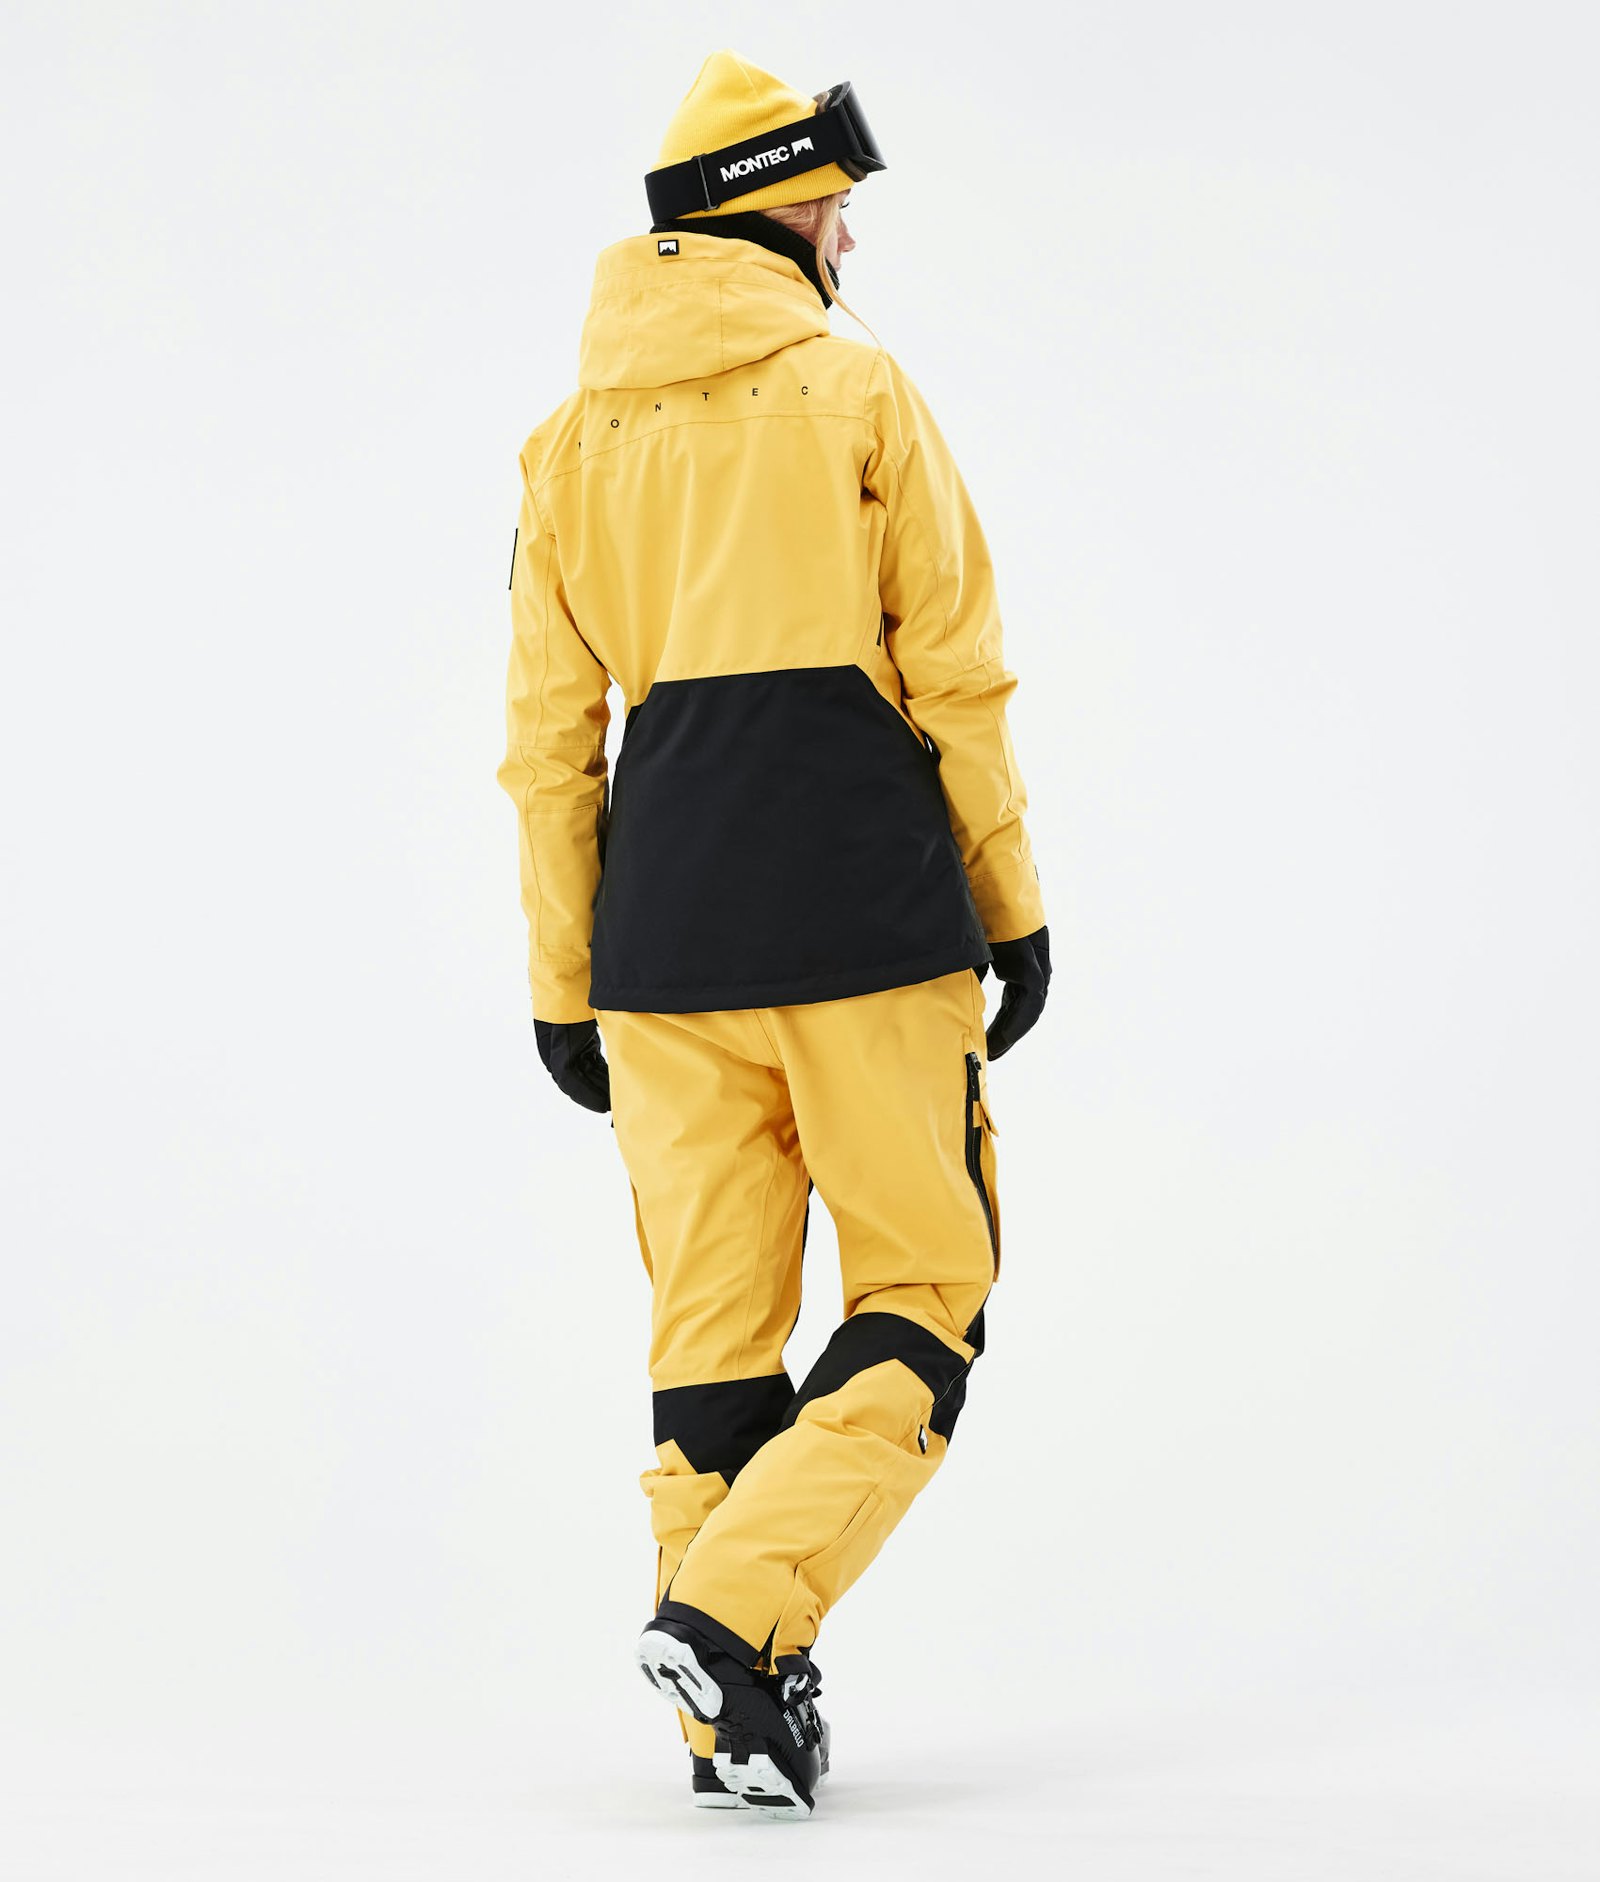 Moss W 2021 Ski Jacket Women Yellow/Black